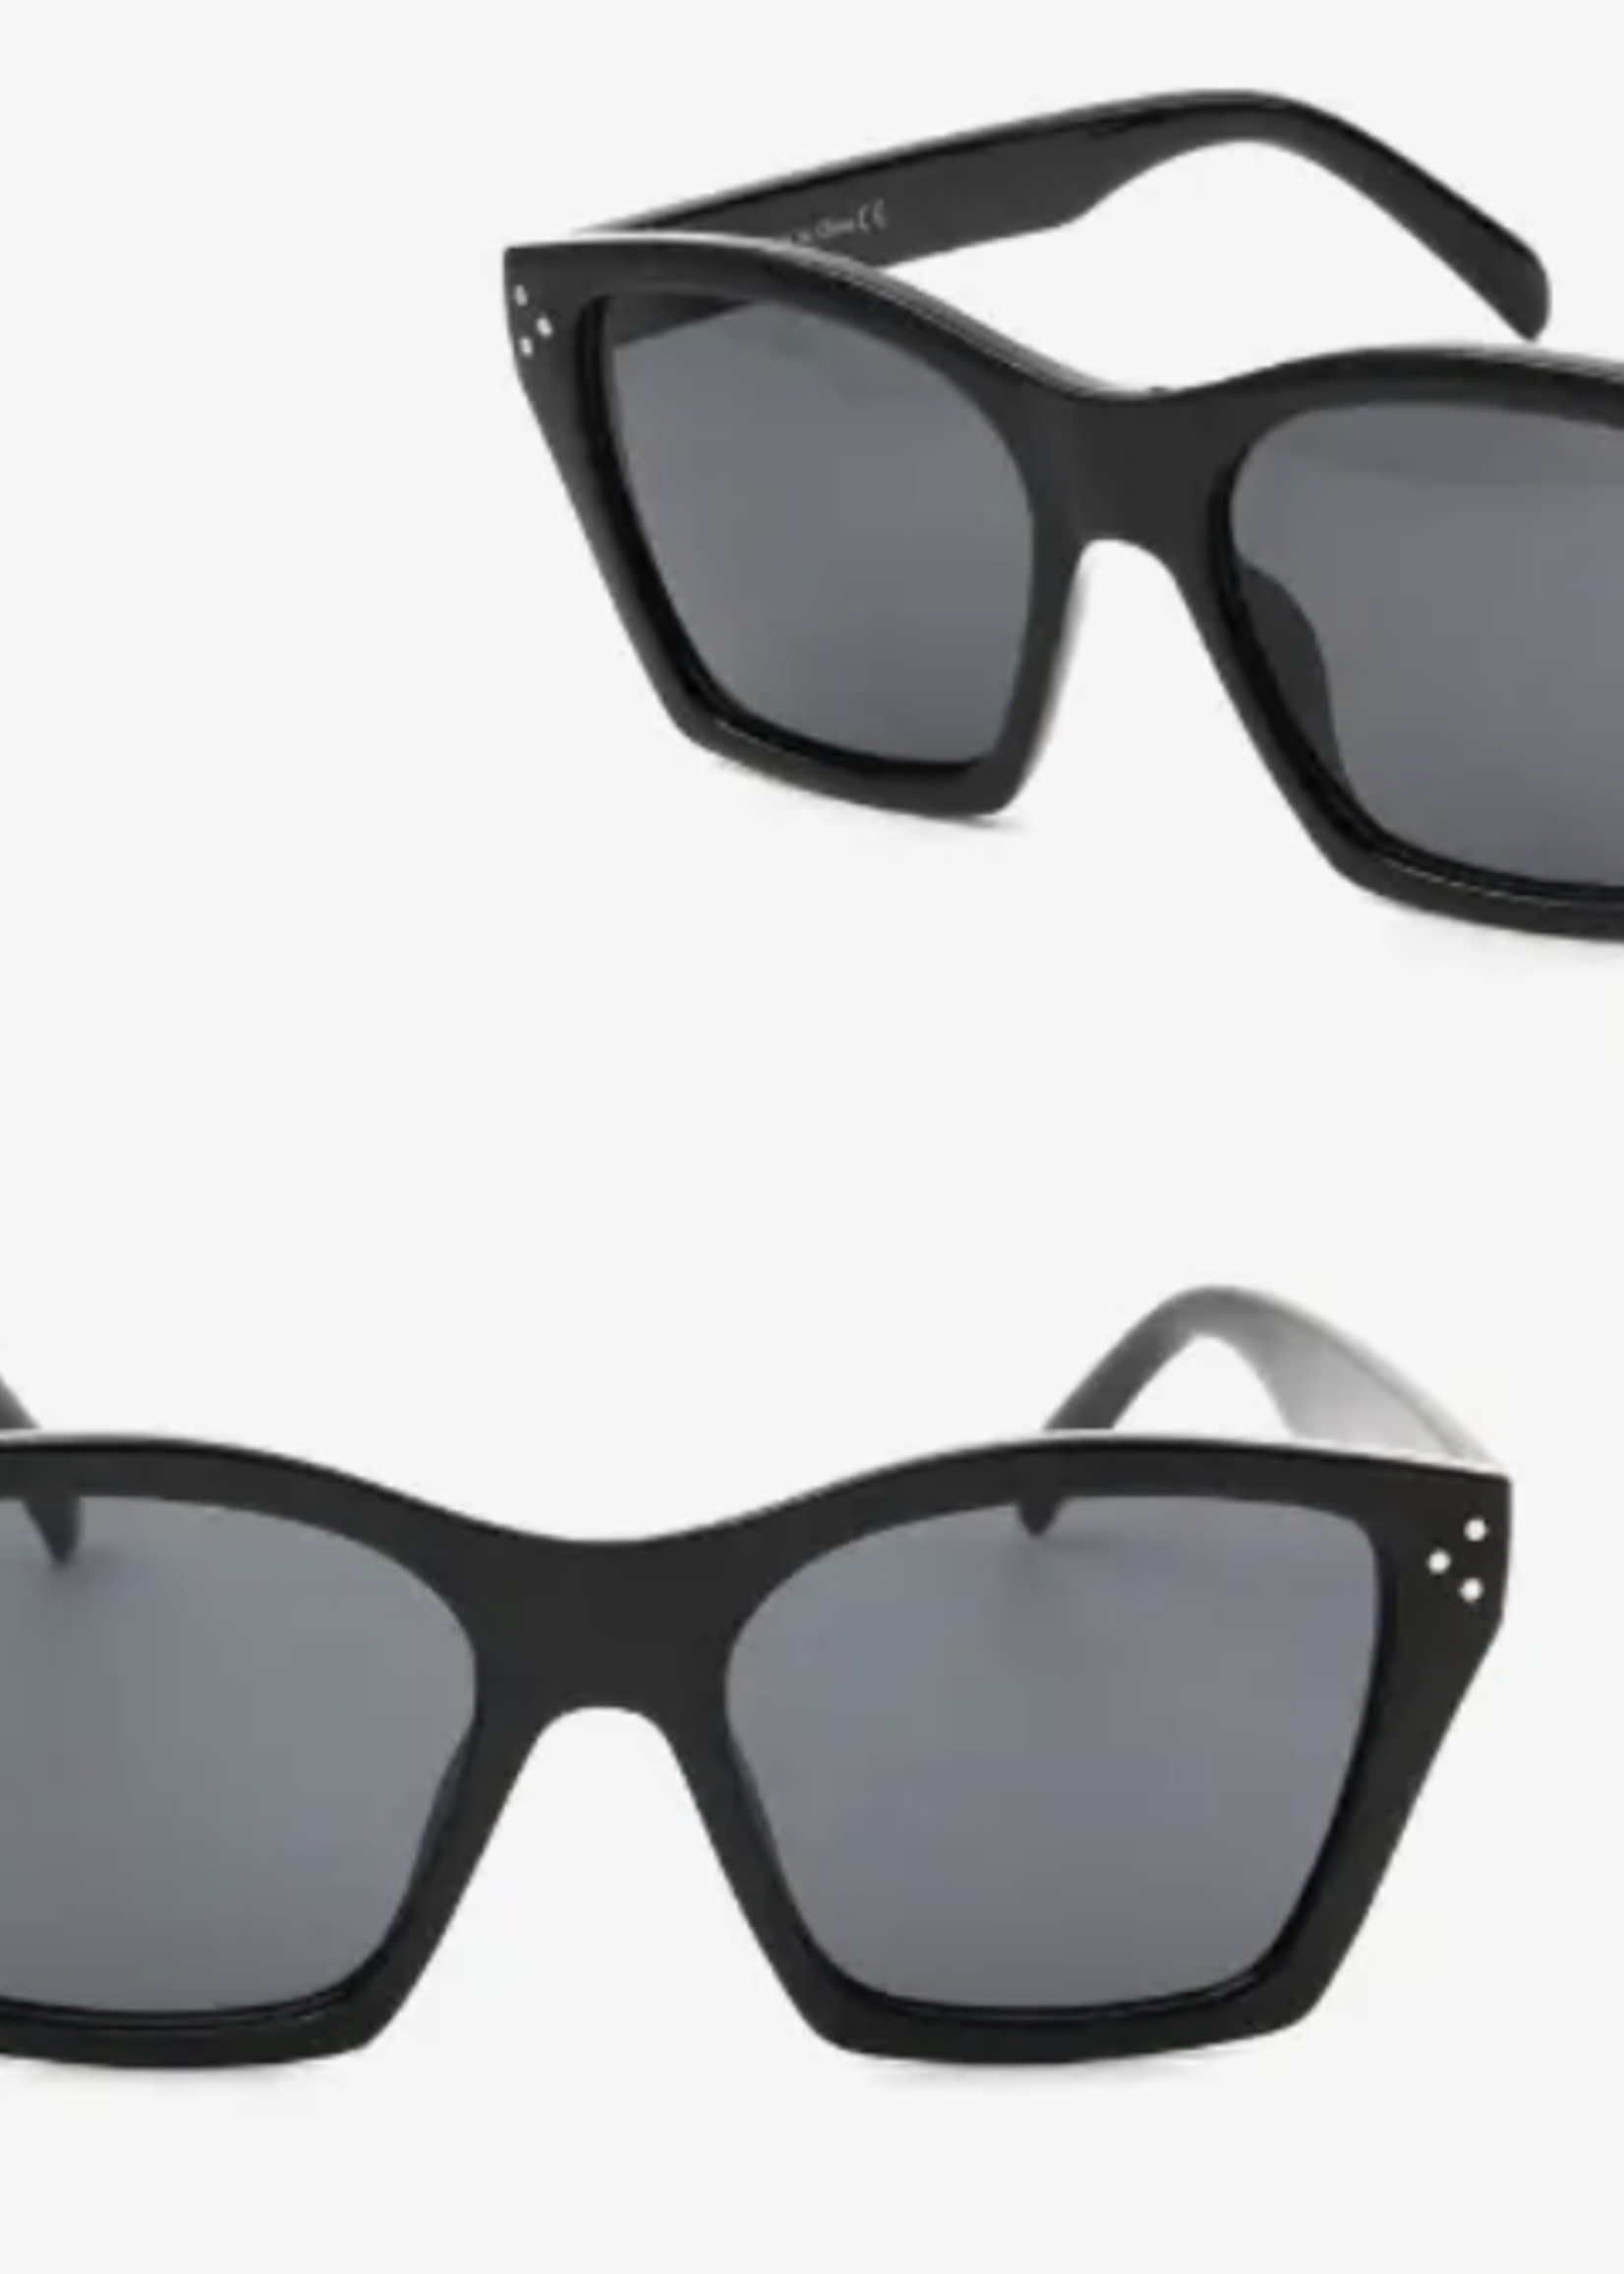 August Avenue Eyewear Stockholm Sunglasses | Black